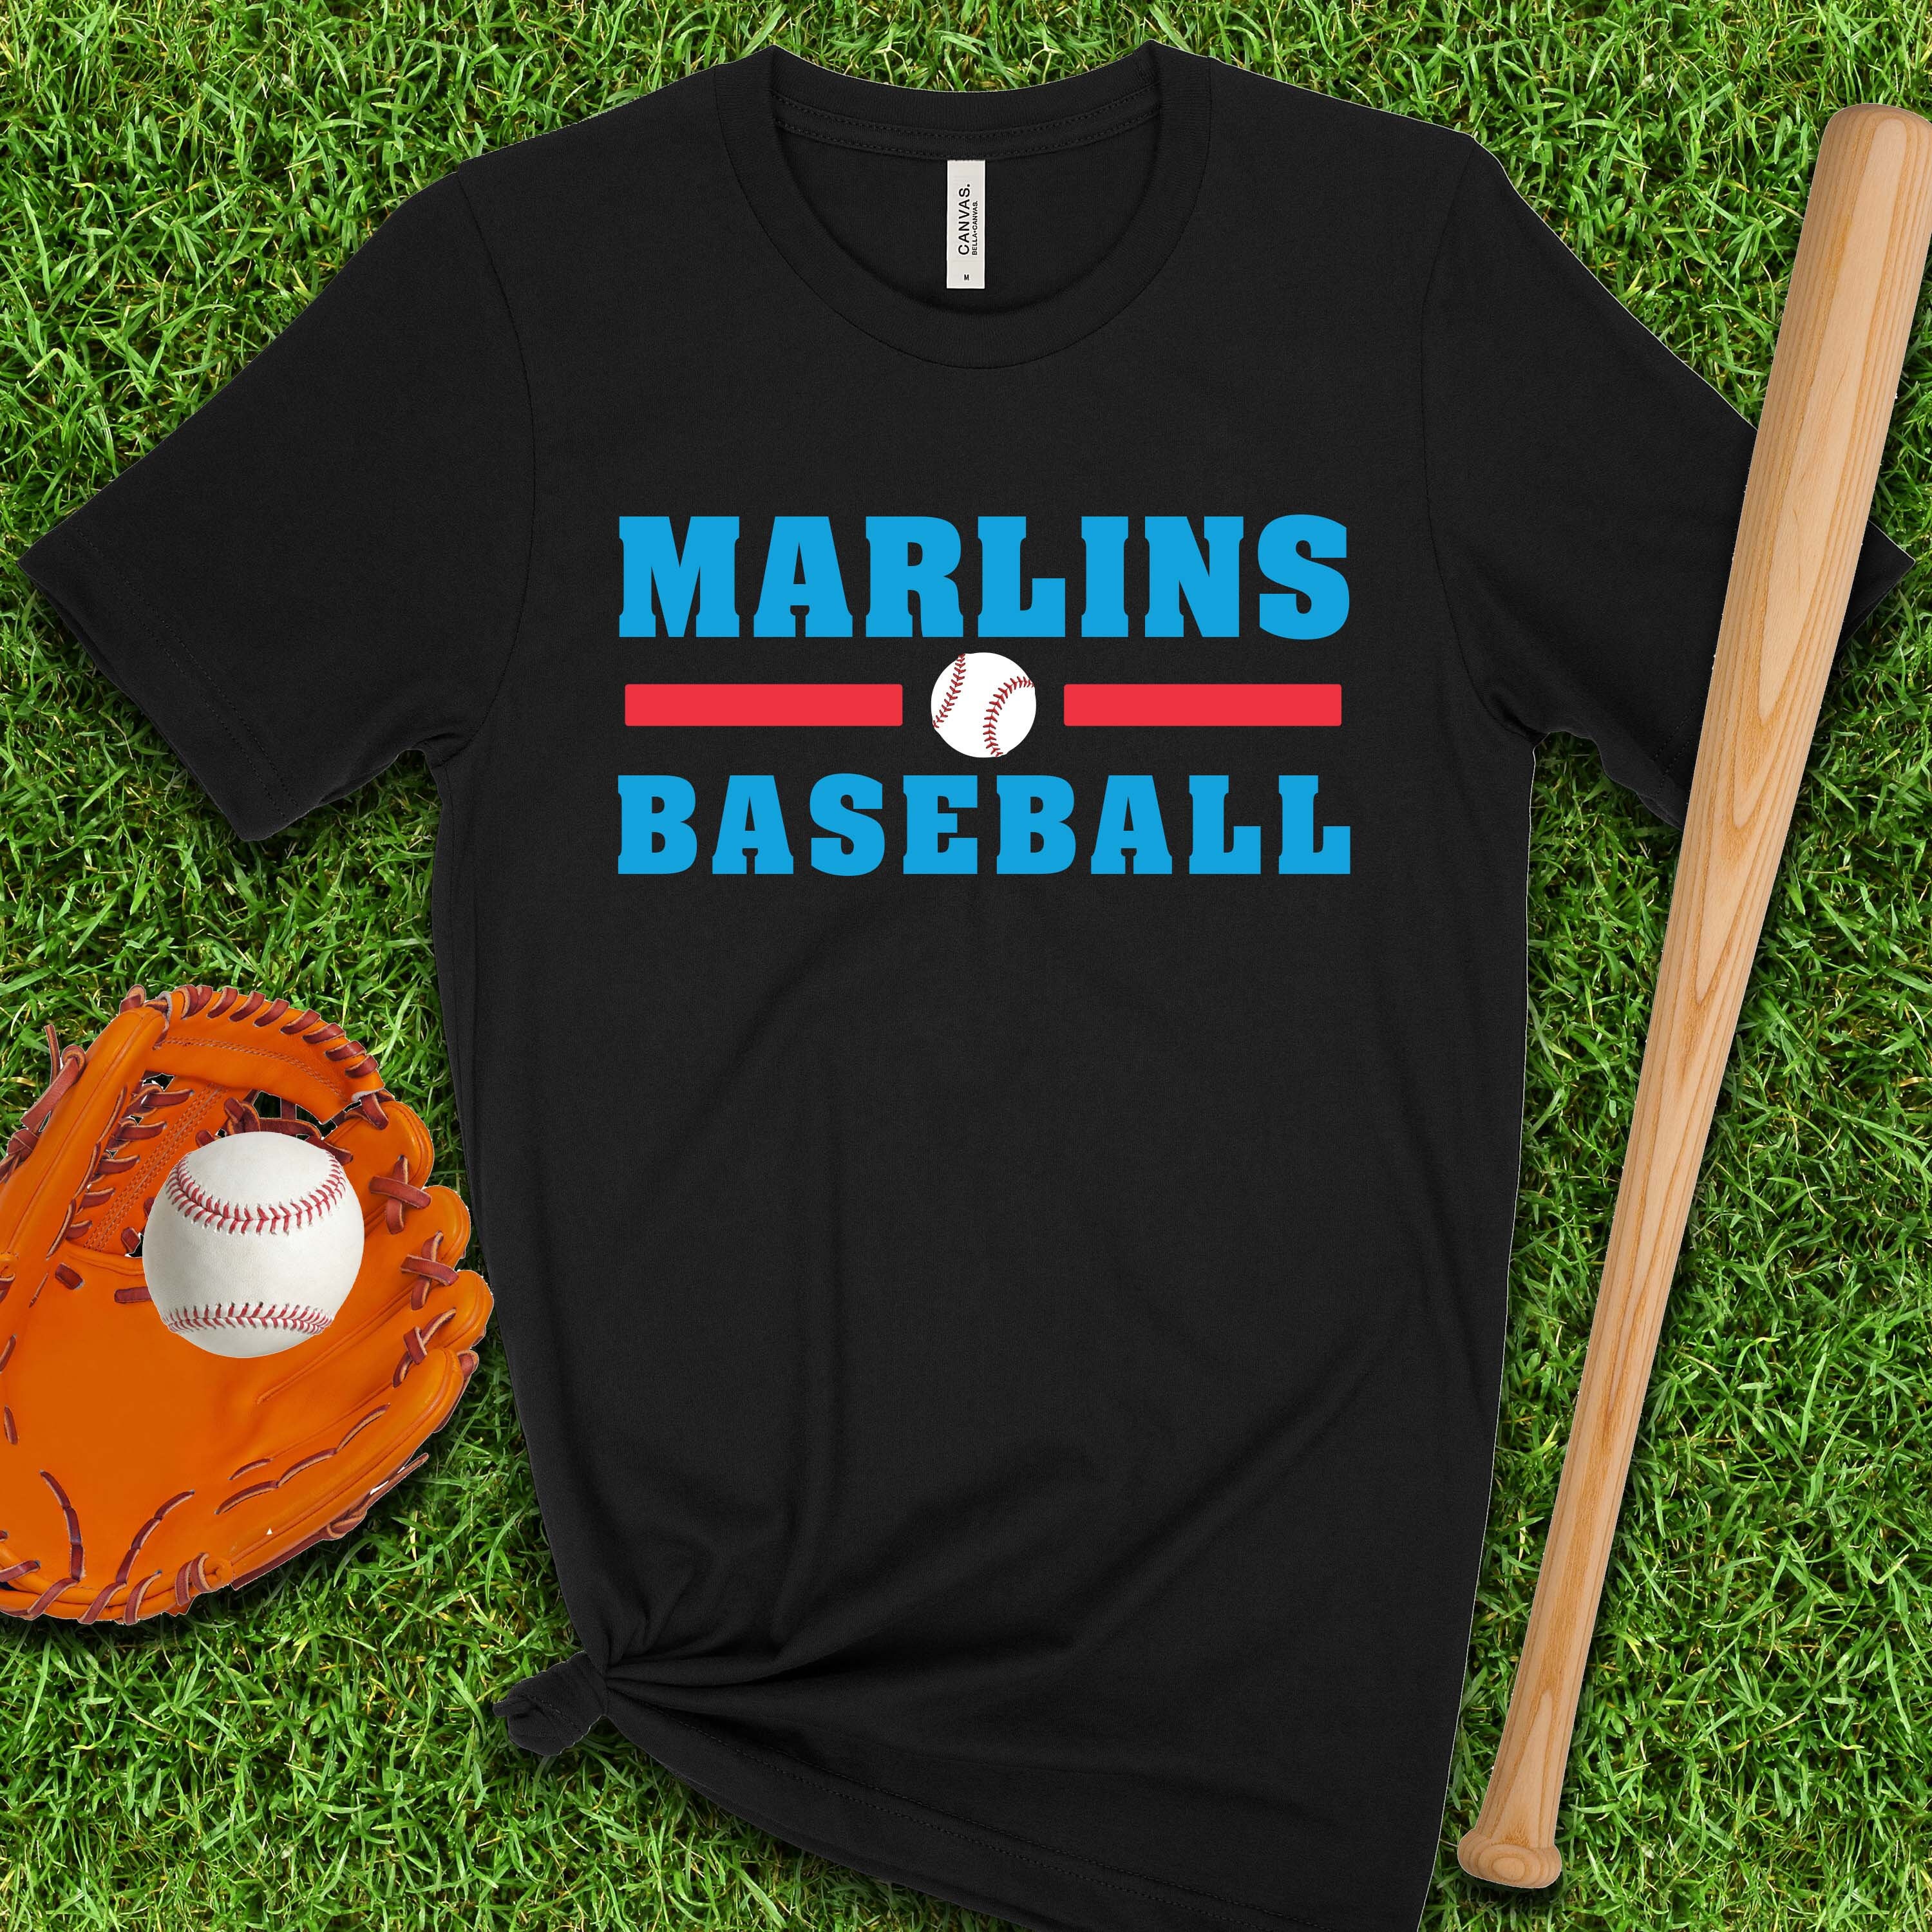 BluejackShirts Marlins Baseball T Shirt, Unisex Shirt